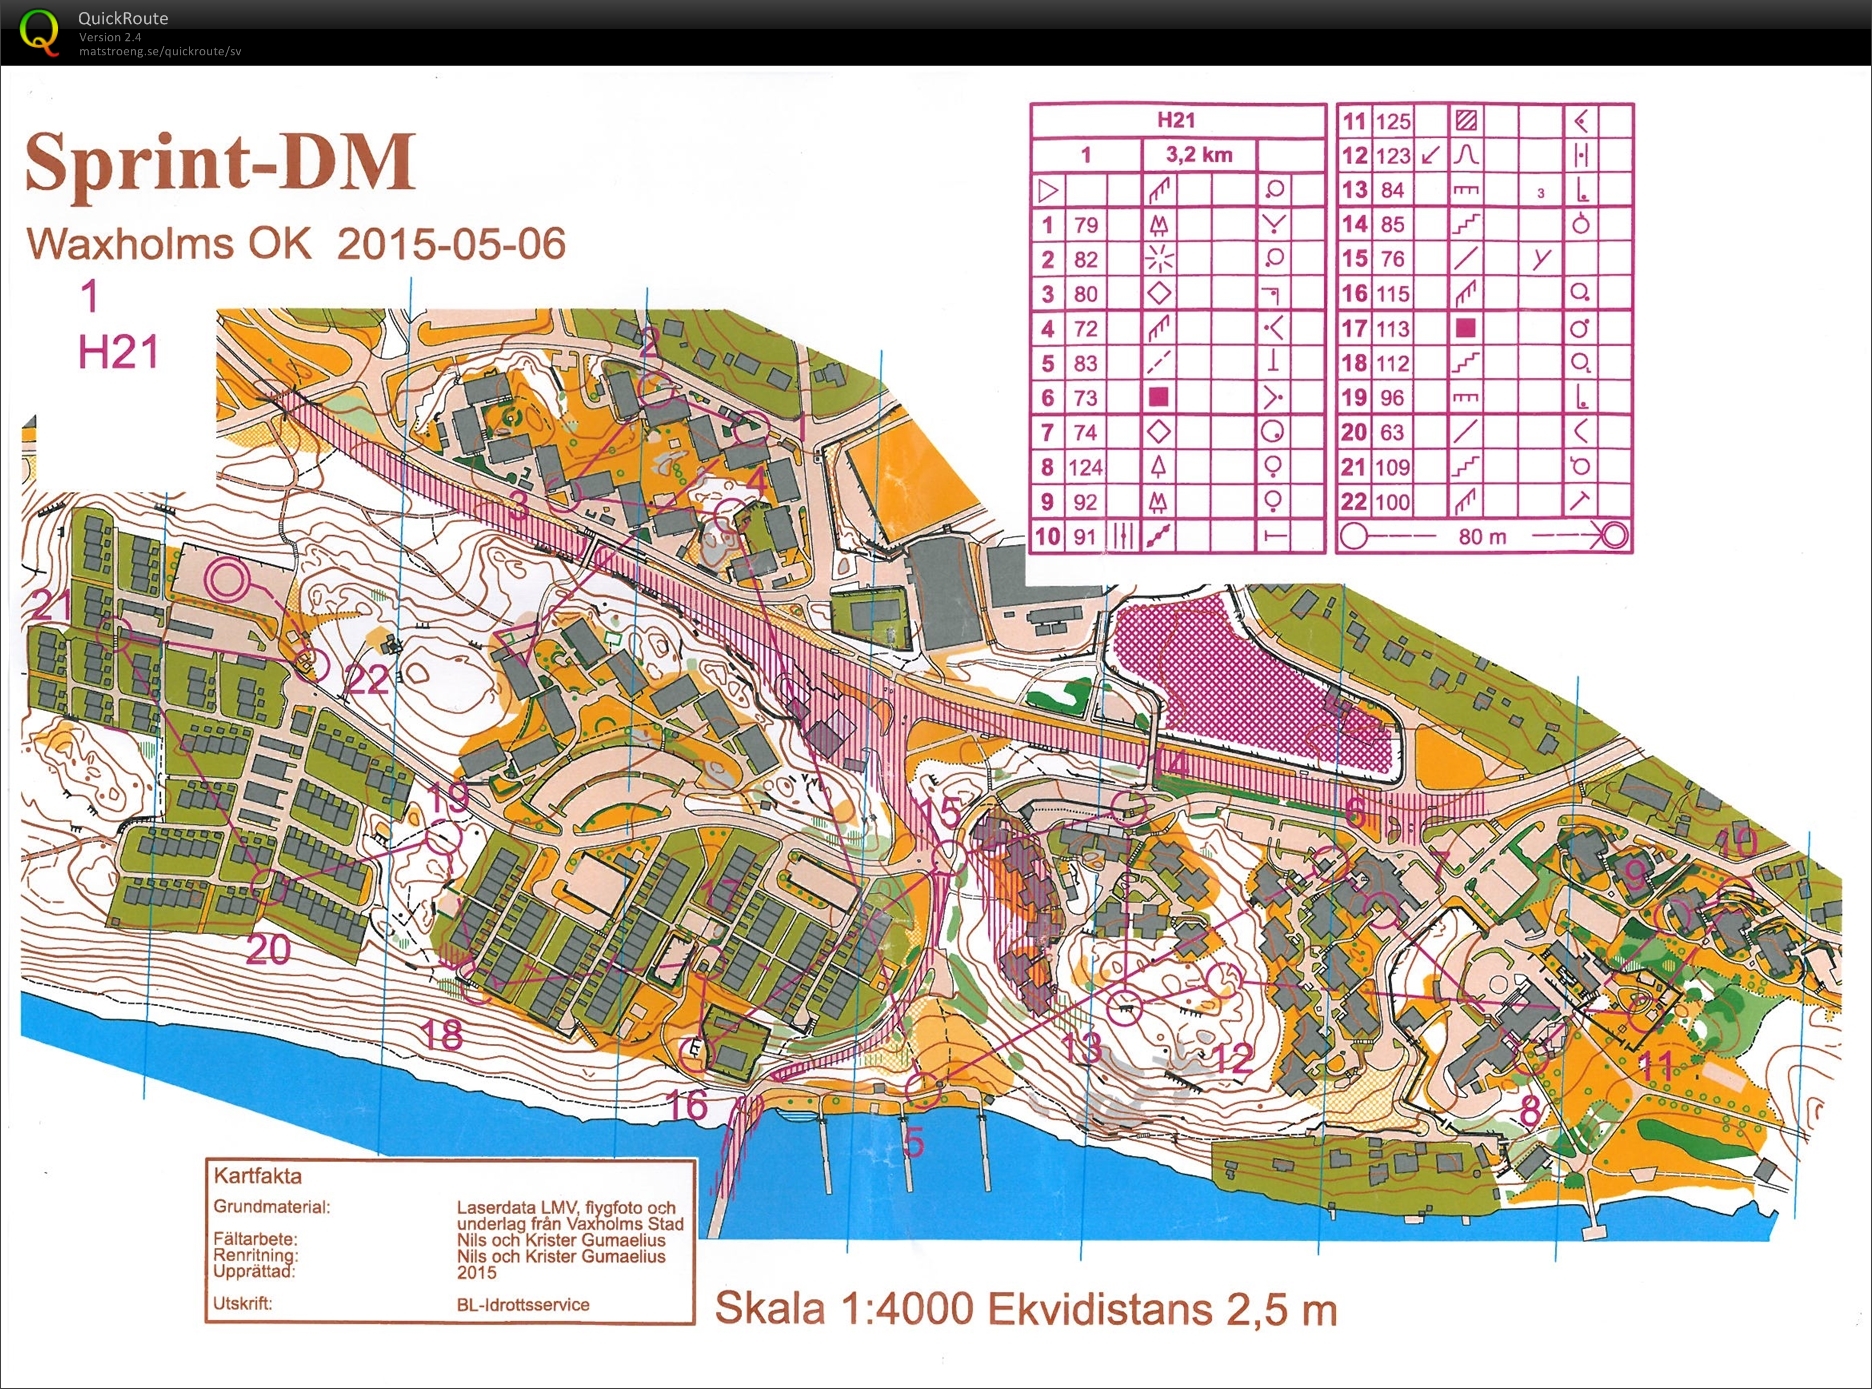 DM sprint Stockholm (H21) (06-05-2015)